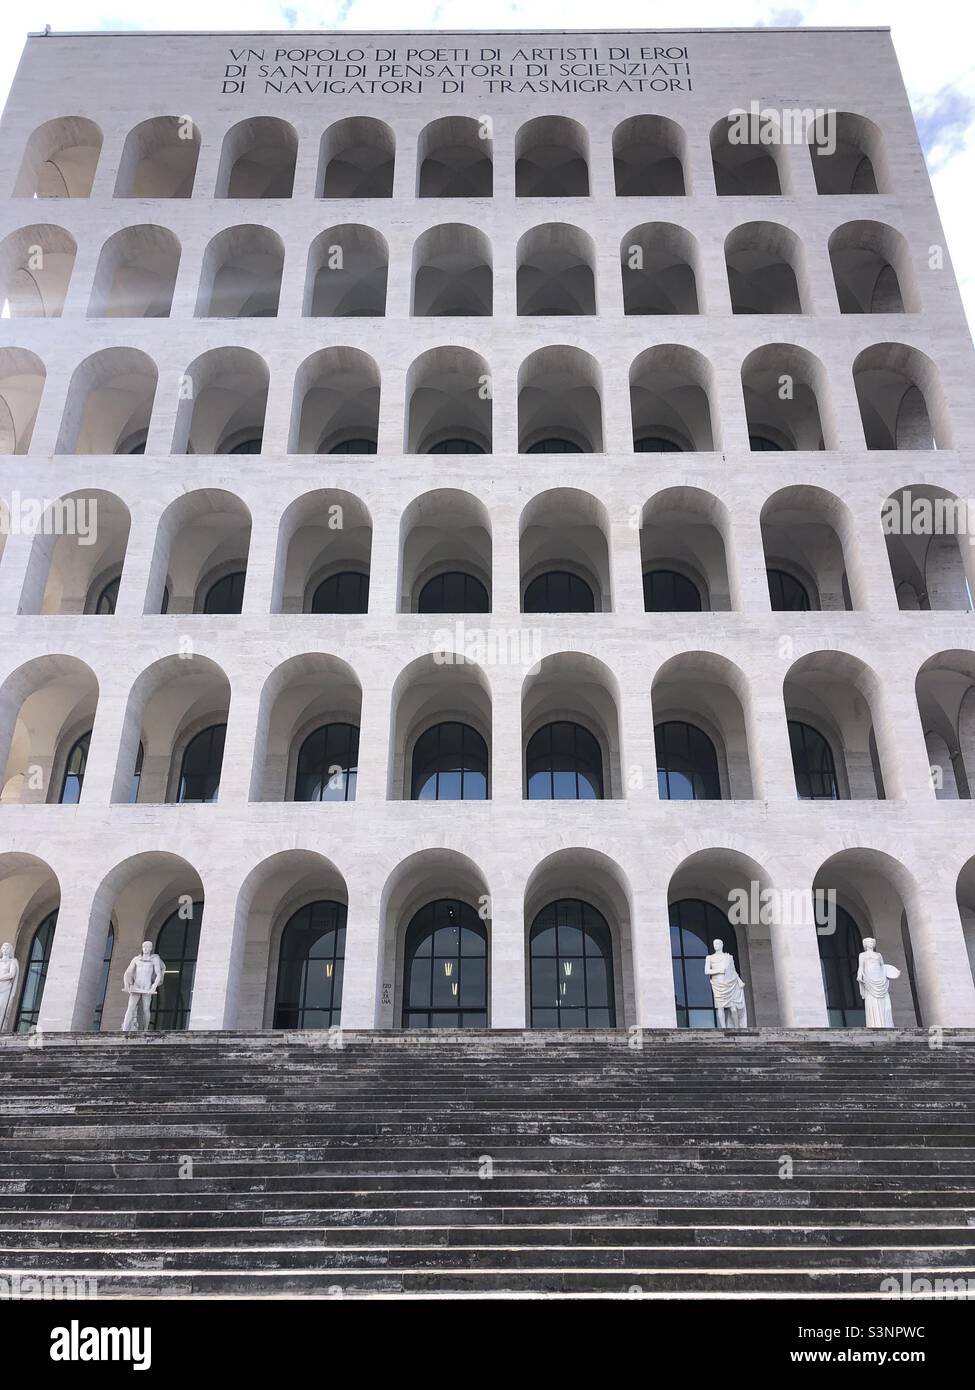 Palazzo della civilita aka Colosseo Quadrato in Rome Italy an iconic  building from Mussolini era that was completed in 1937 Stock Photo - Alamy